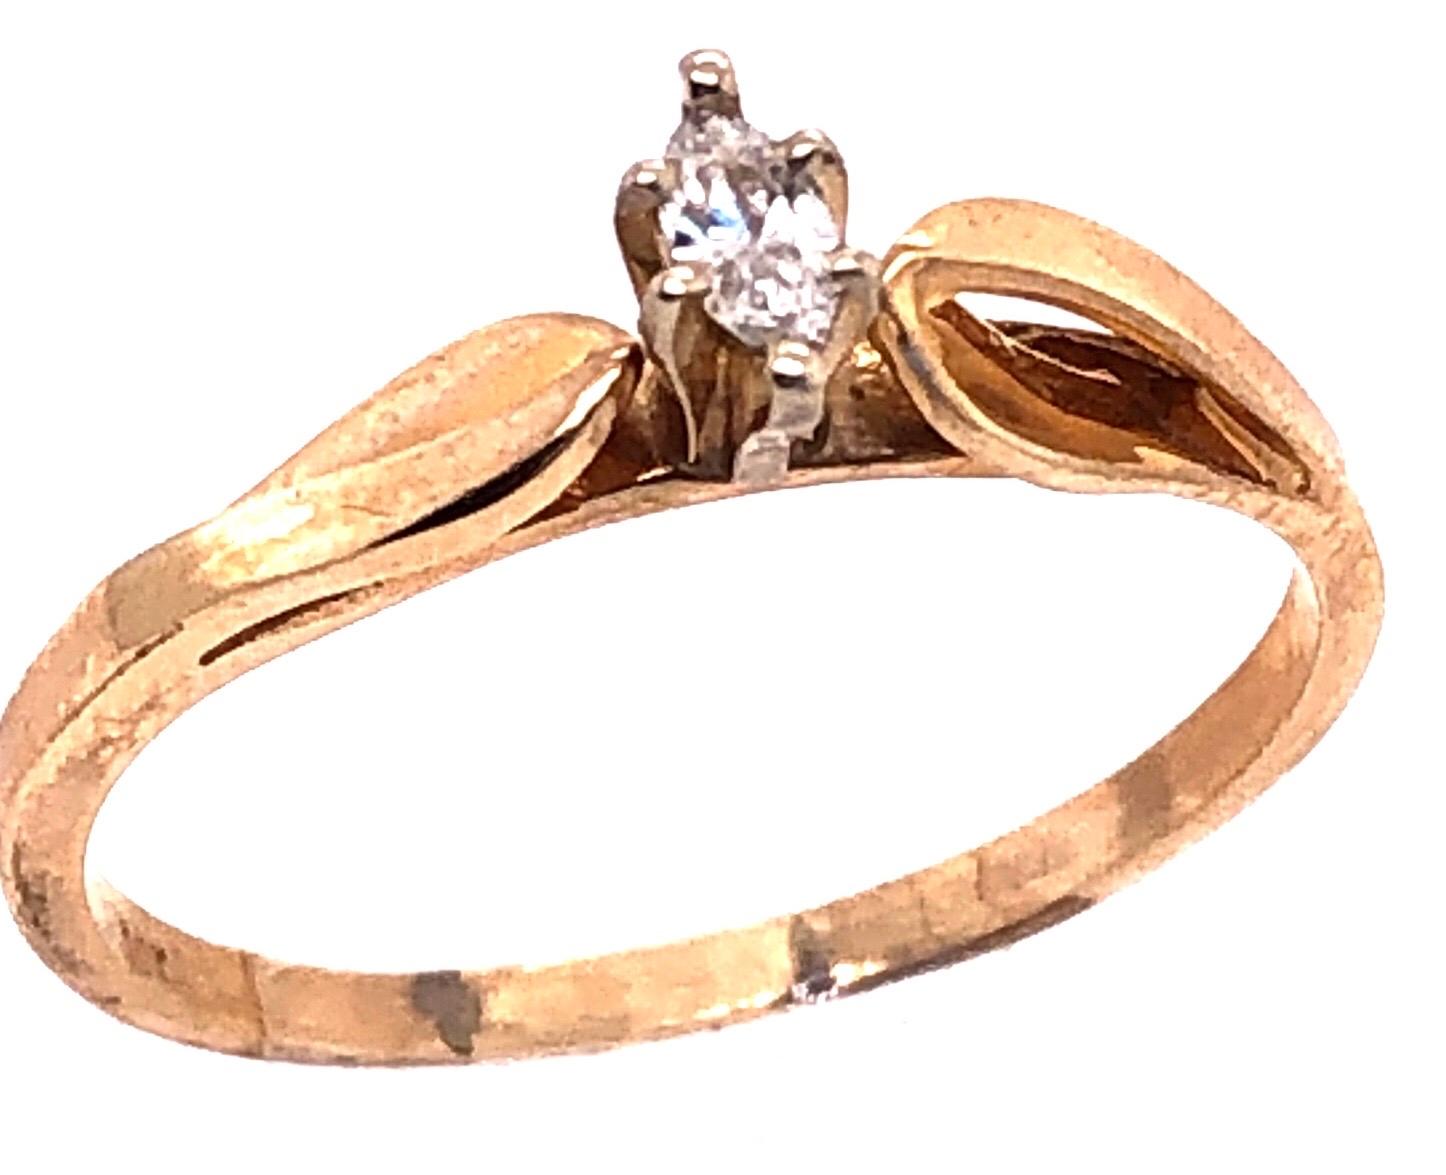 14 Karat Yellow Gold fashion Ring with Diamond 0.10 Total Diamond Weight.
Size 8
2 grams total weight.